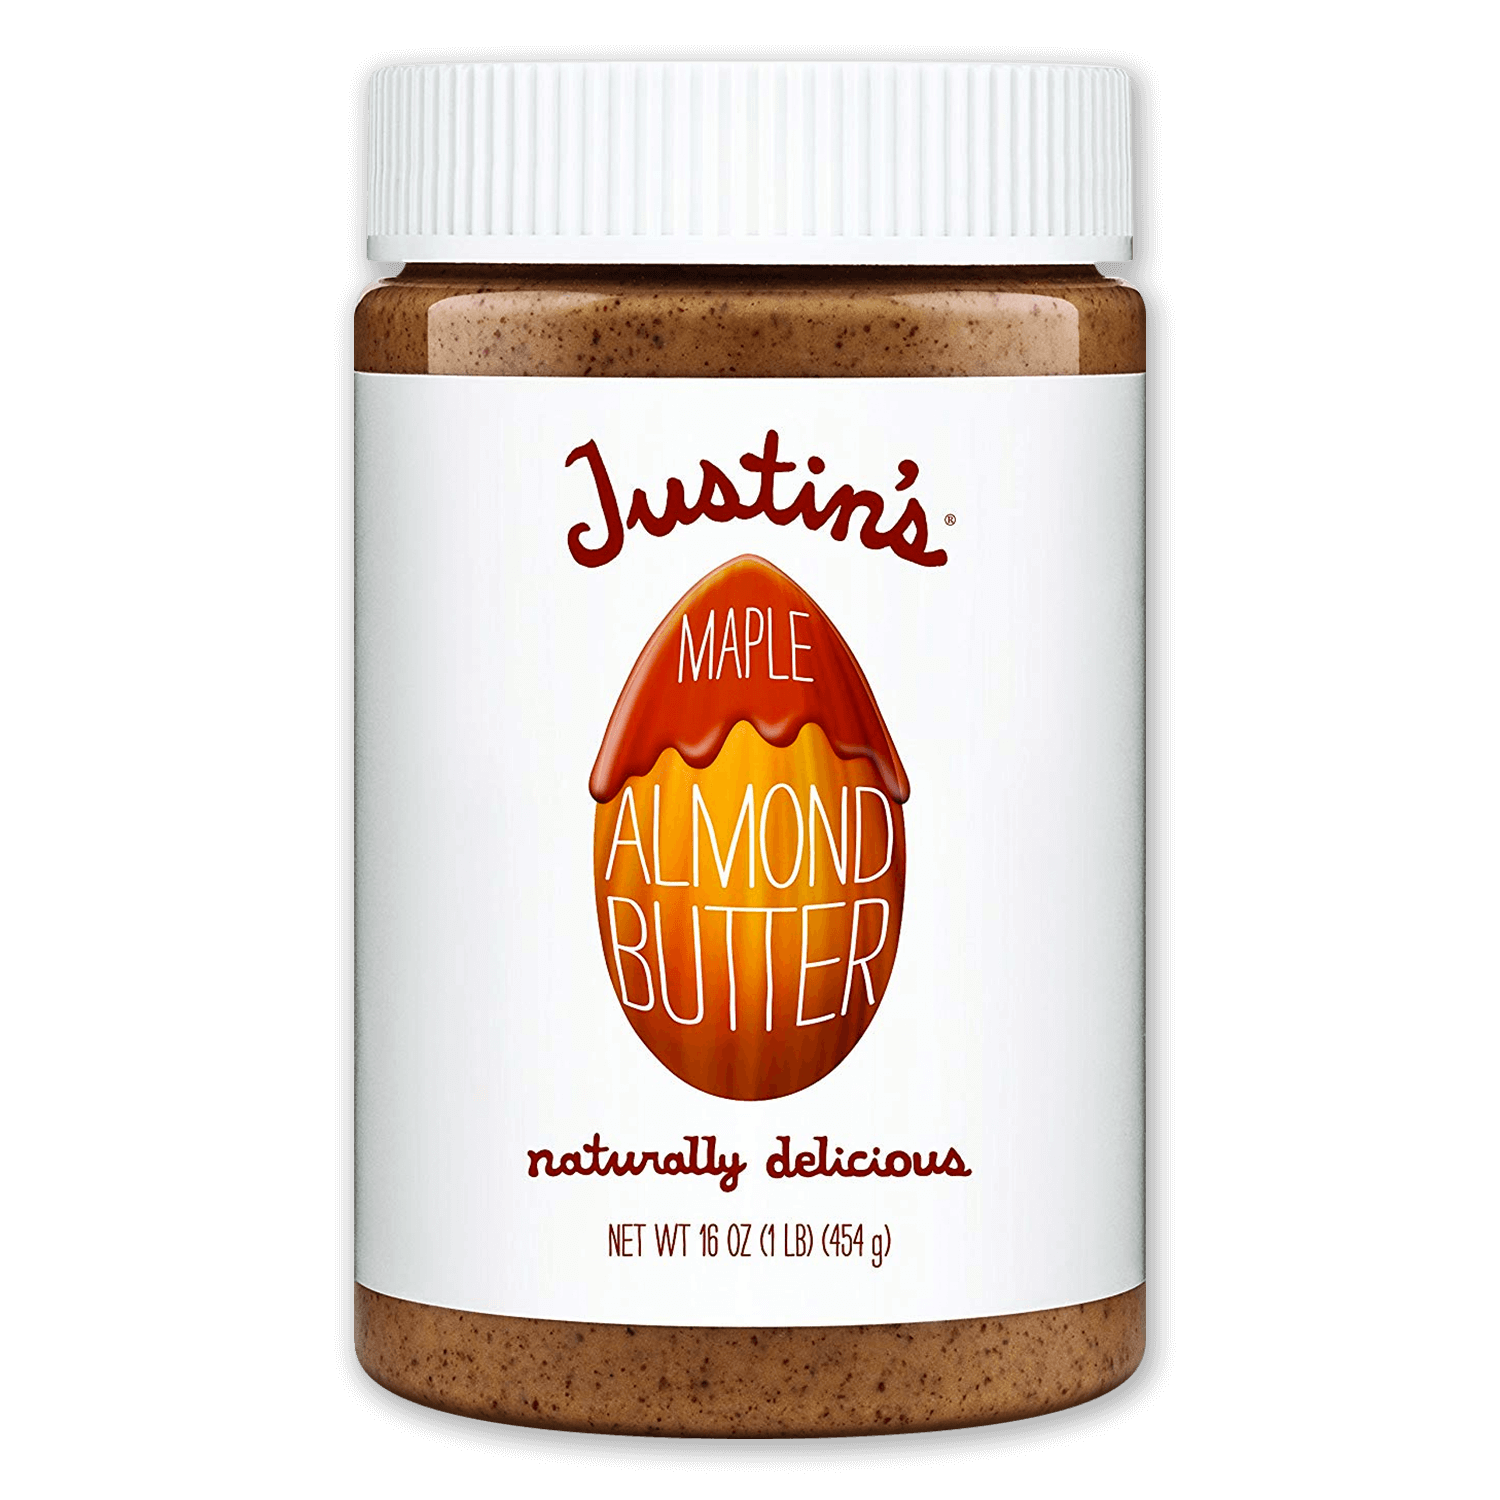 Justin's Maple Almond Butter Spread jar 16 oz.